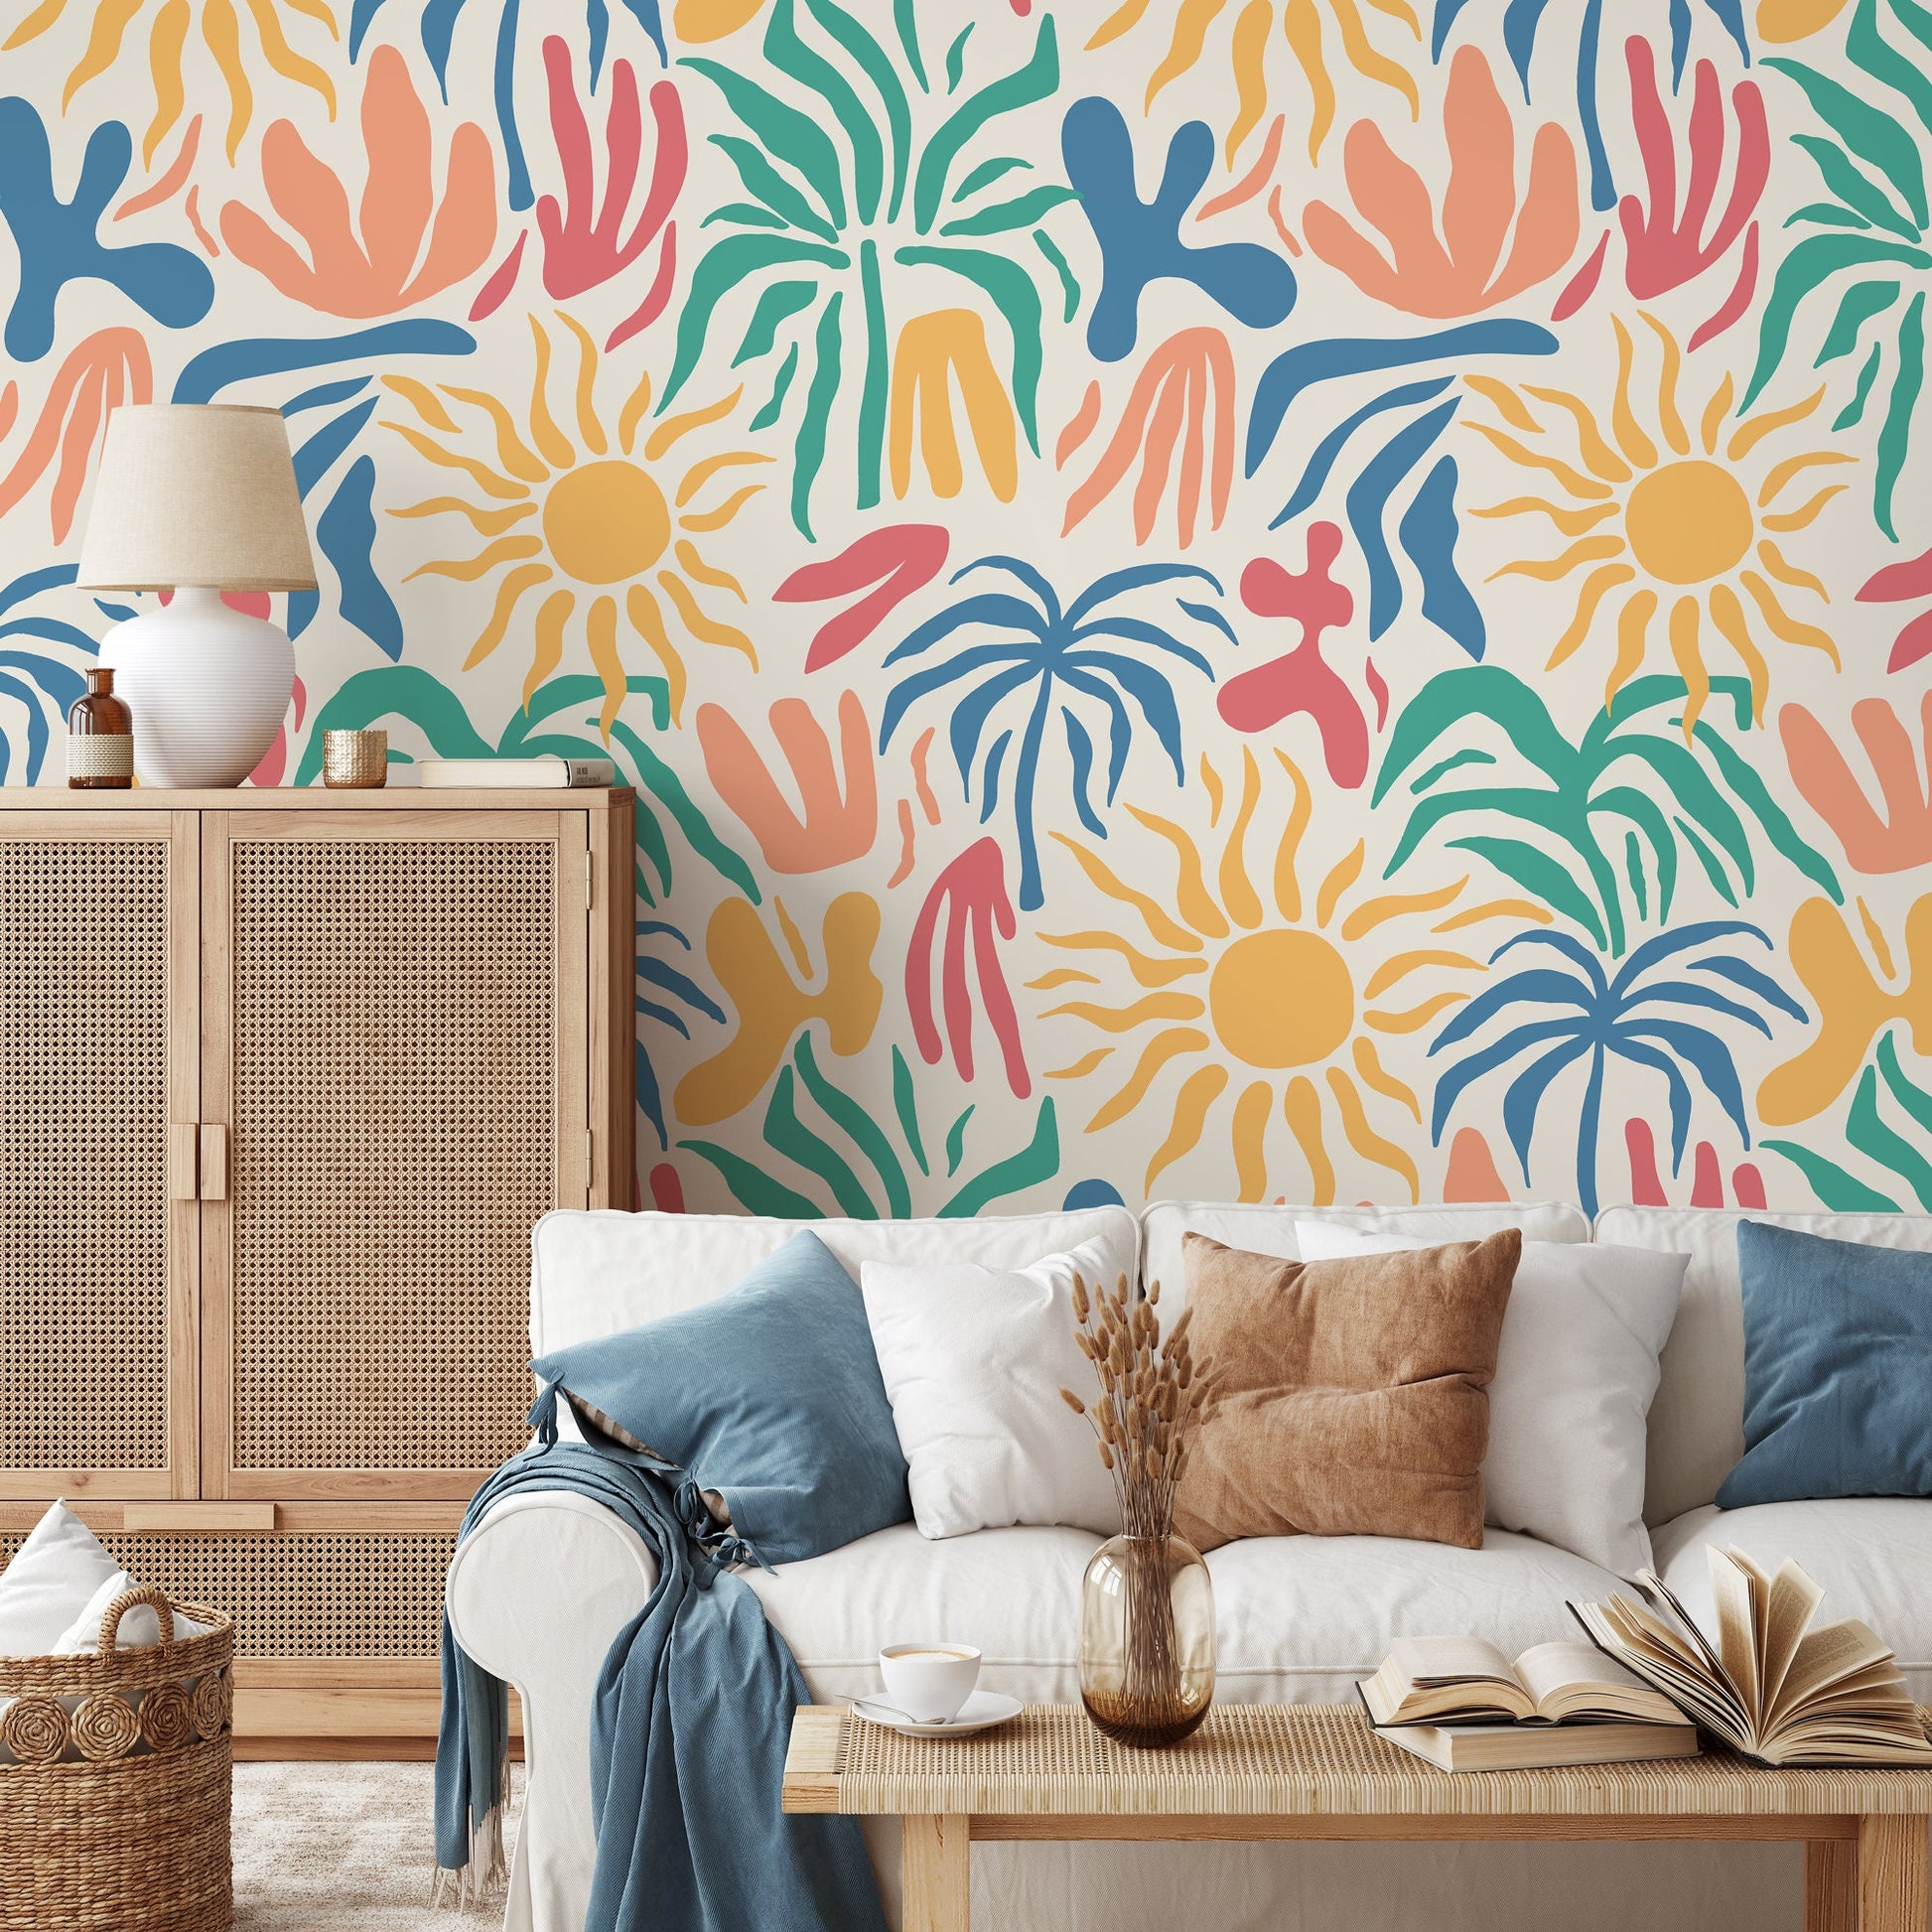 Colorful Tropical Shapes Wallpaper / Peel and Stick Wallpaper Removable Wallpaper Home Decor Wall Art Wall Decor Room Decor - D248